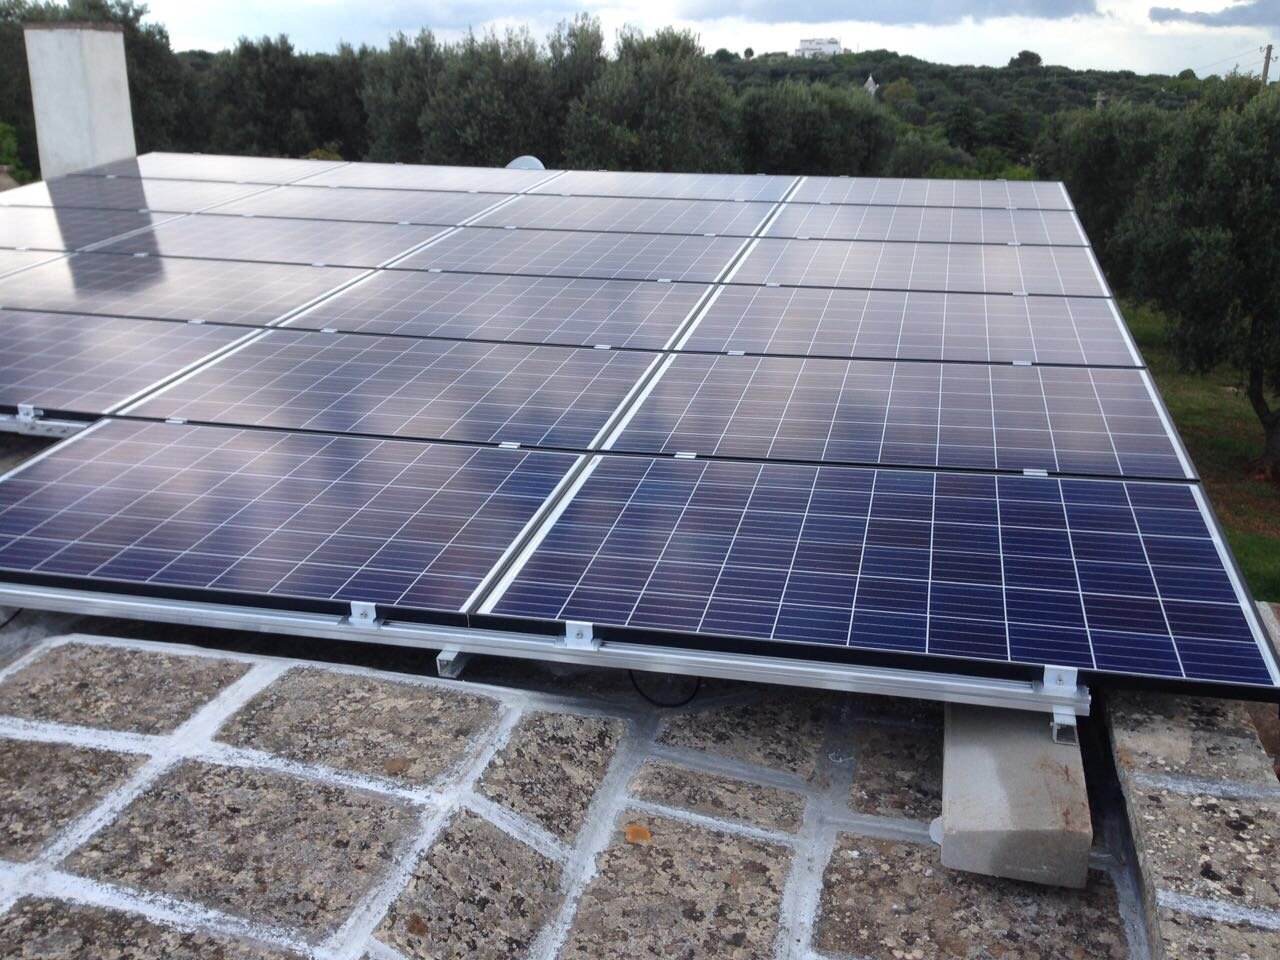 High-performance solar panels